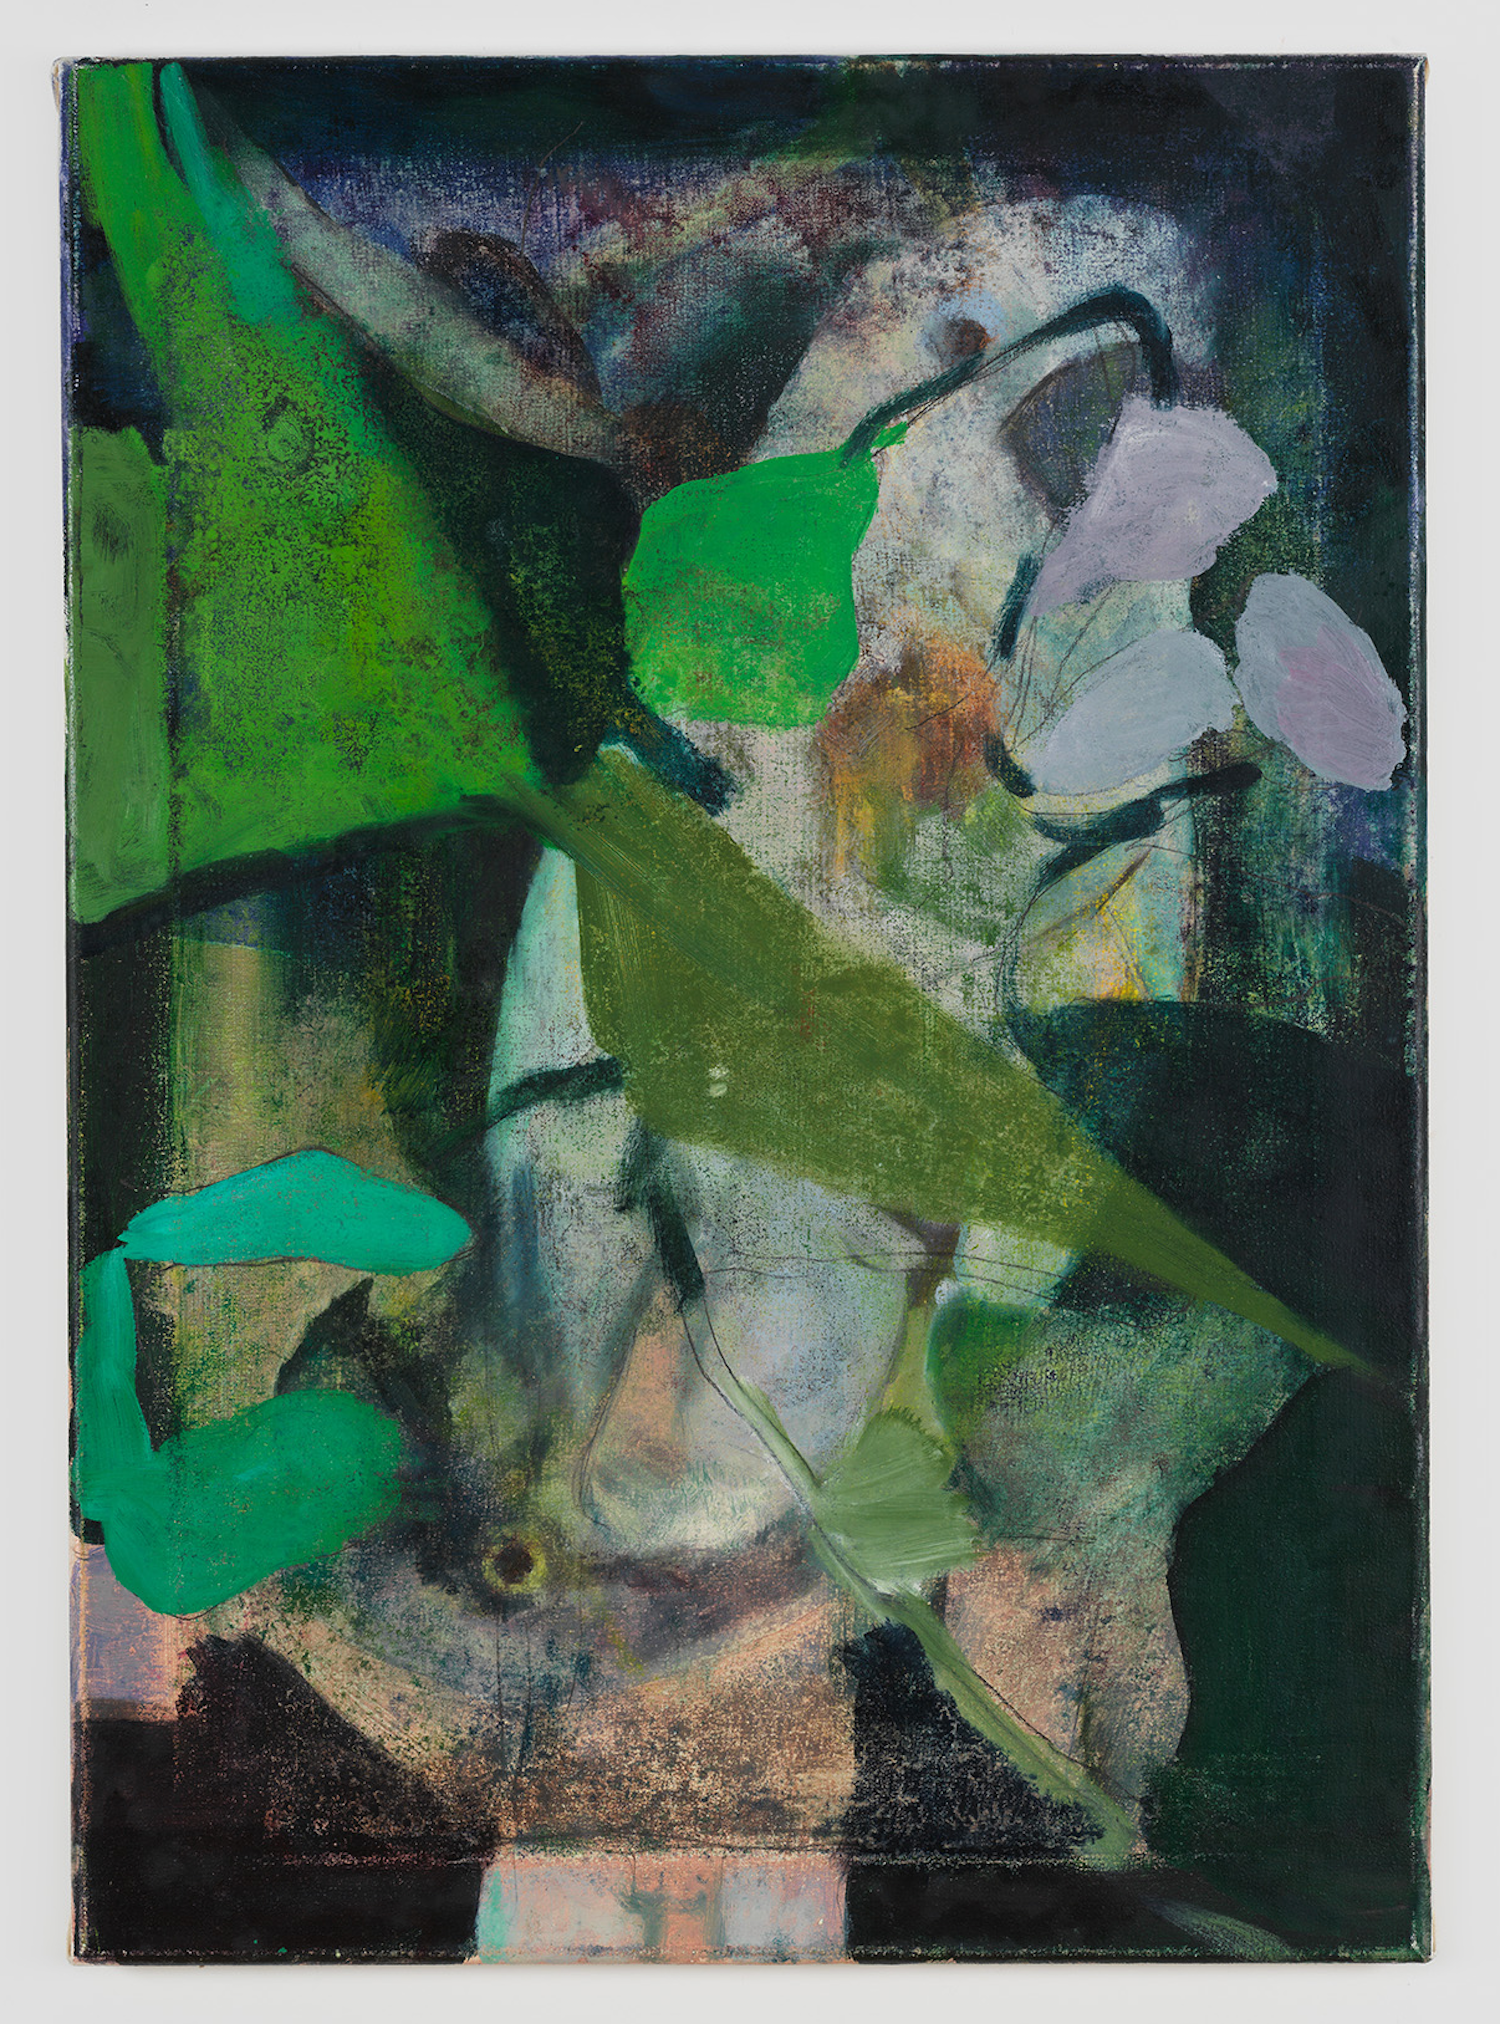  Pierres, 2016  70 x 45 cm. oil on canvas 